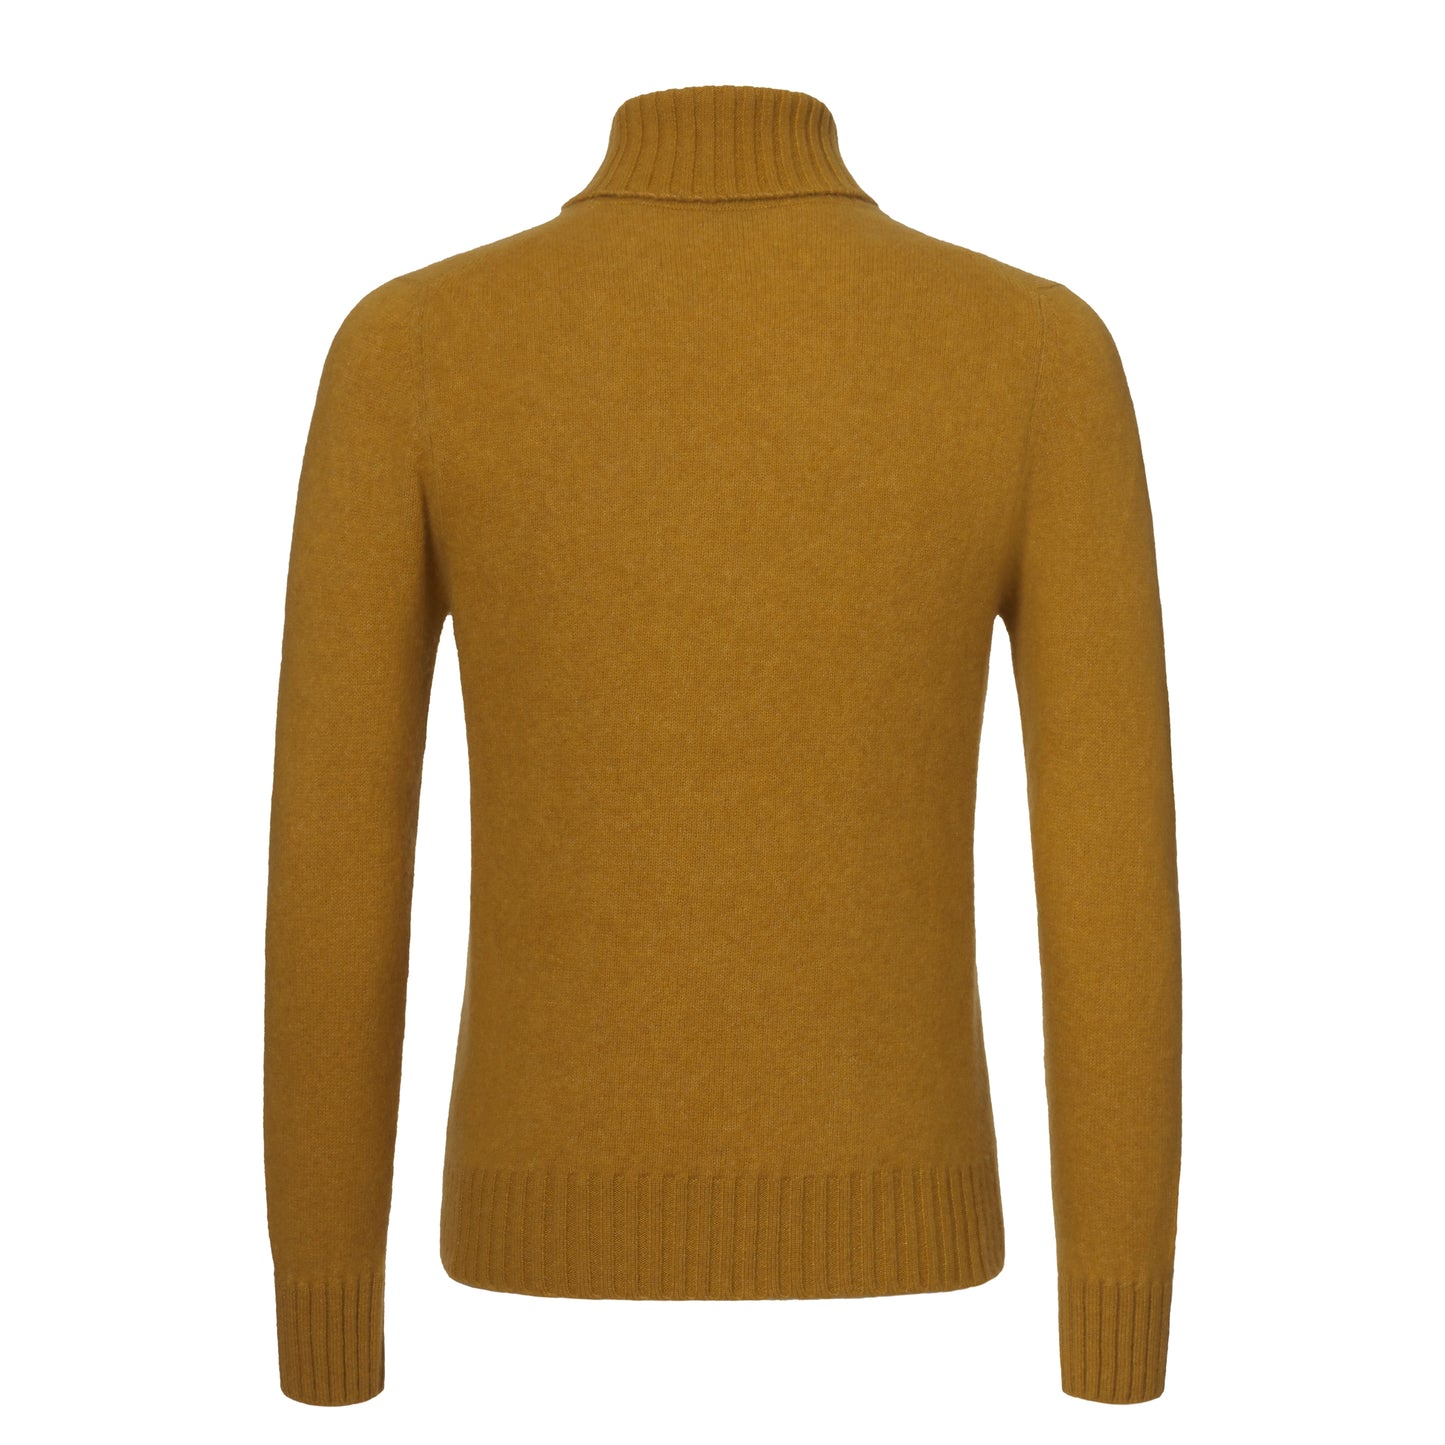 Cashmere Turtleneck Sweater in Mustard Yellow